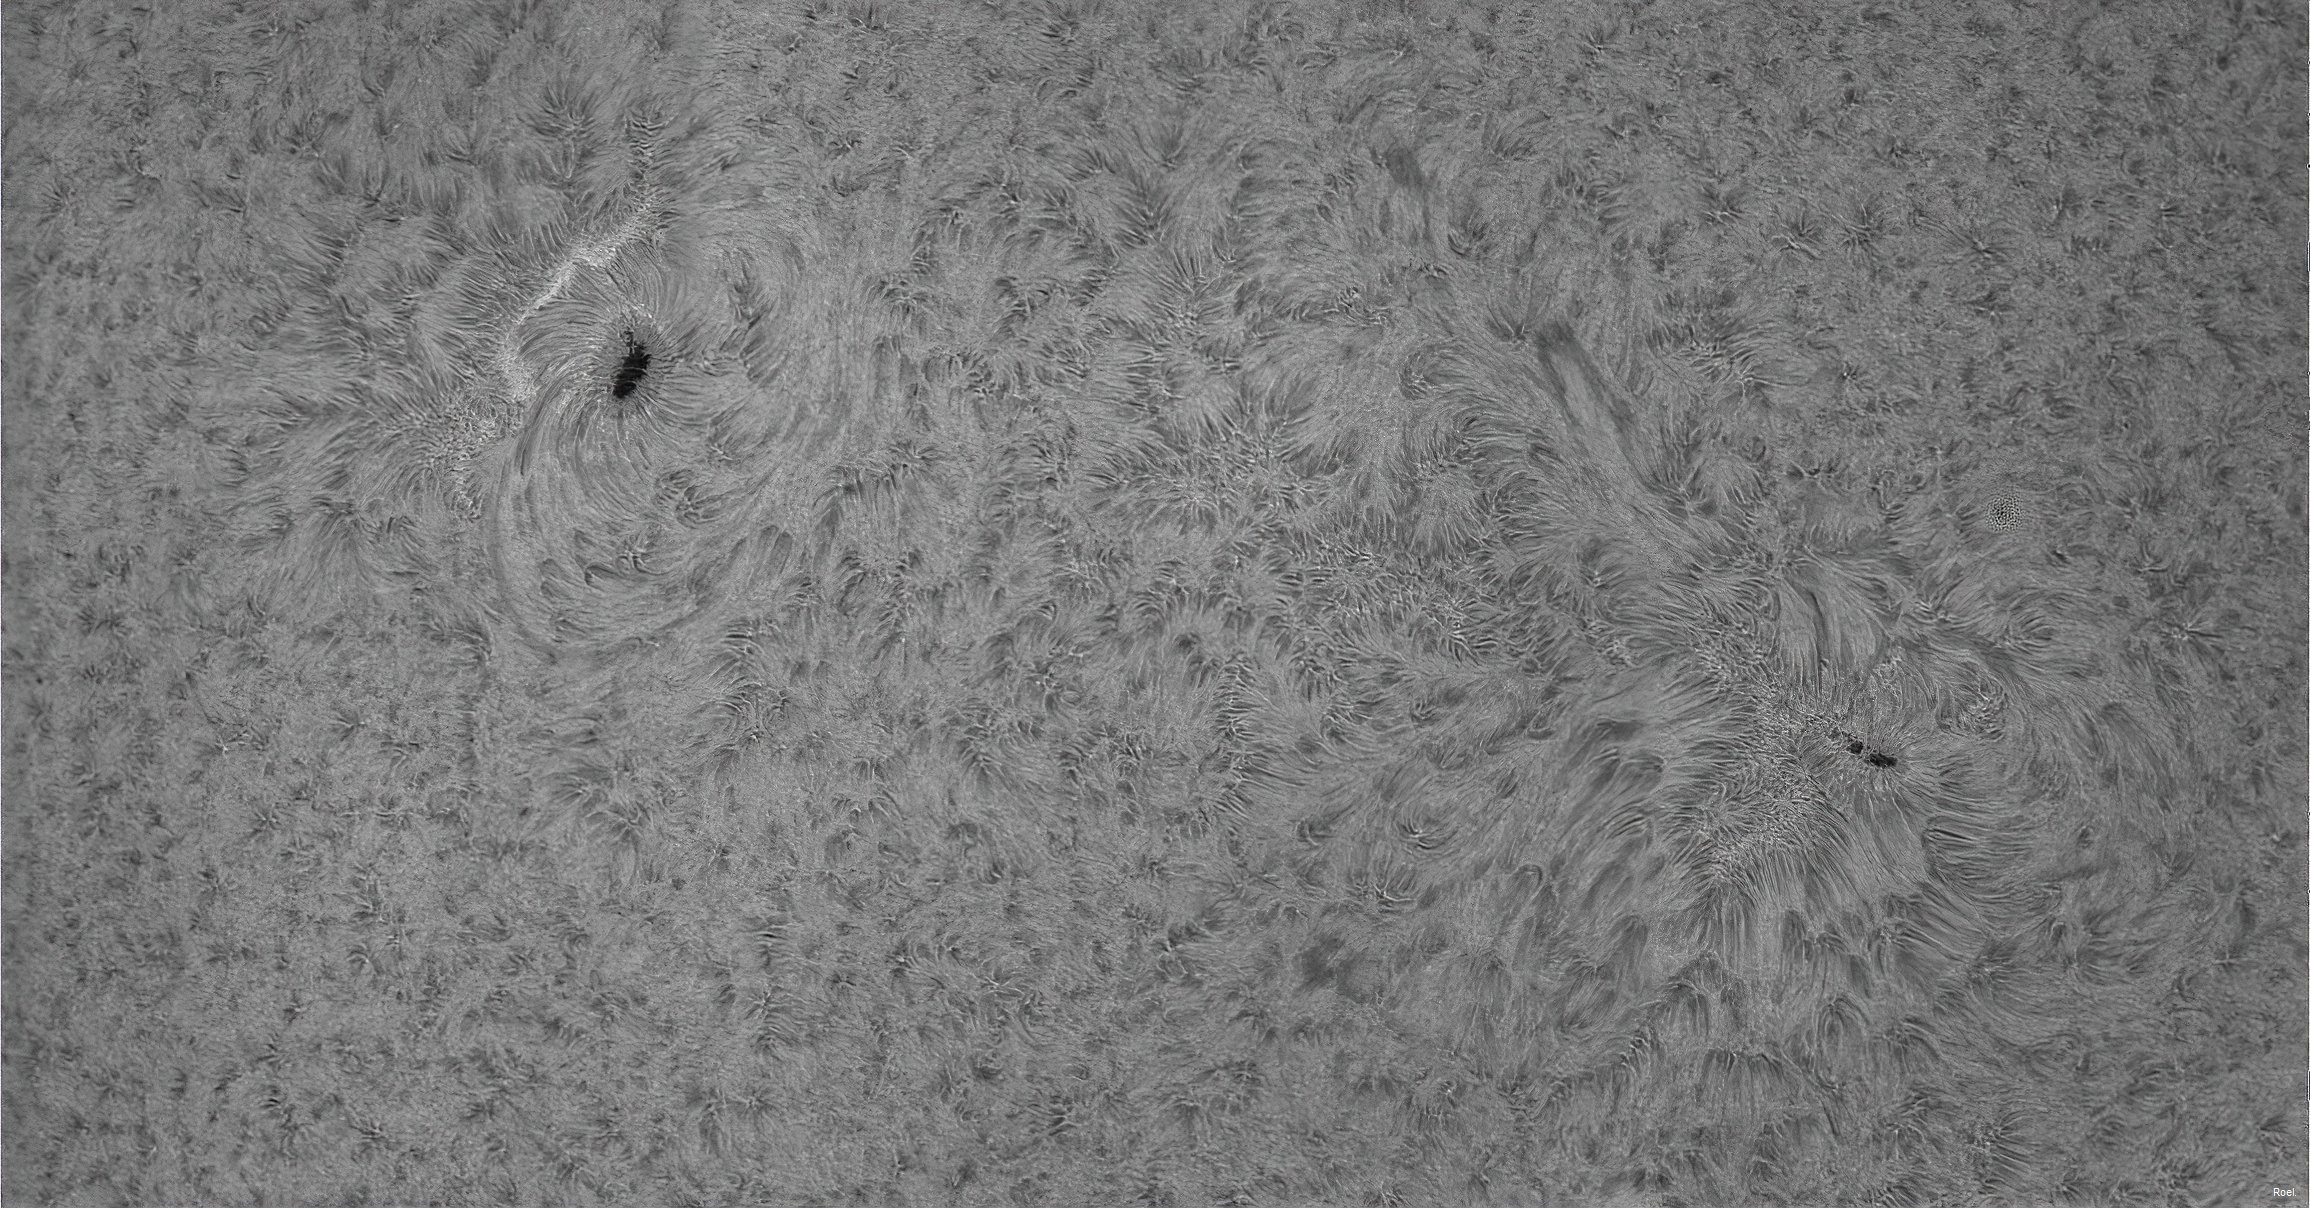 Mosaico solar del 10 de mayo del 2019-Stellarvue-Daystar-4an.jpg